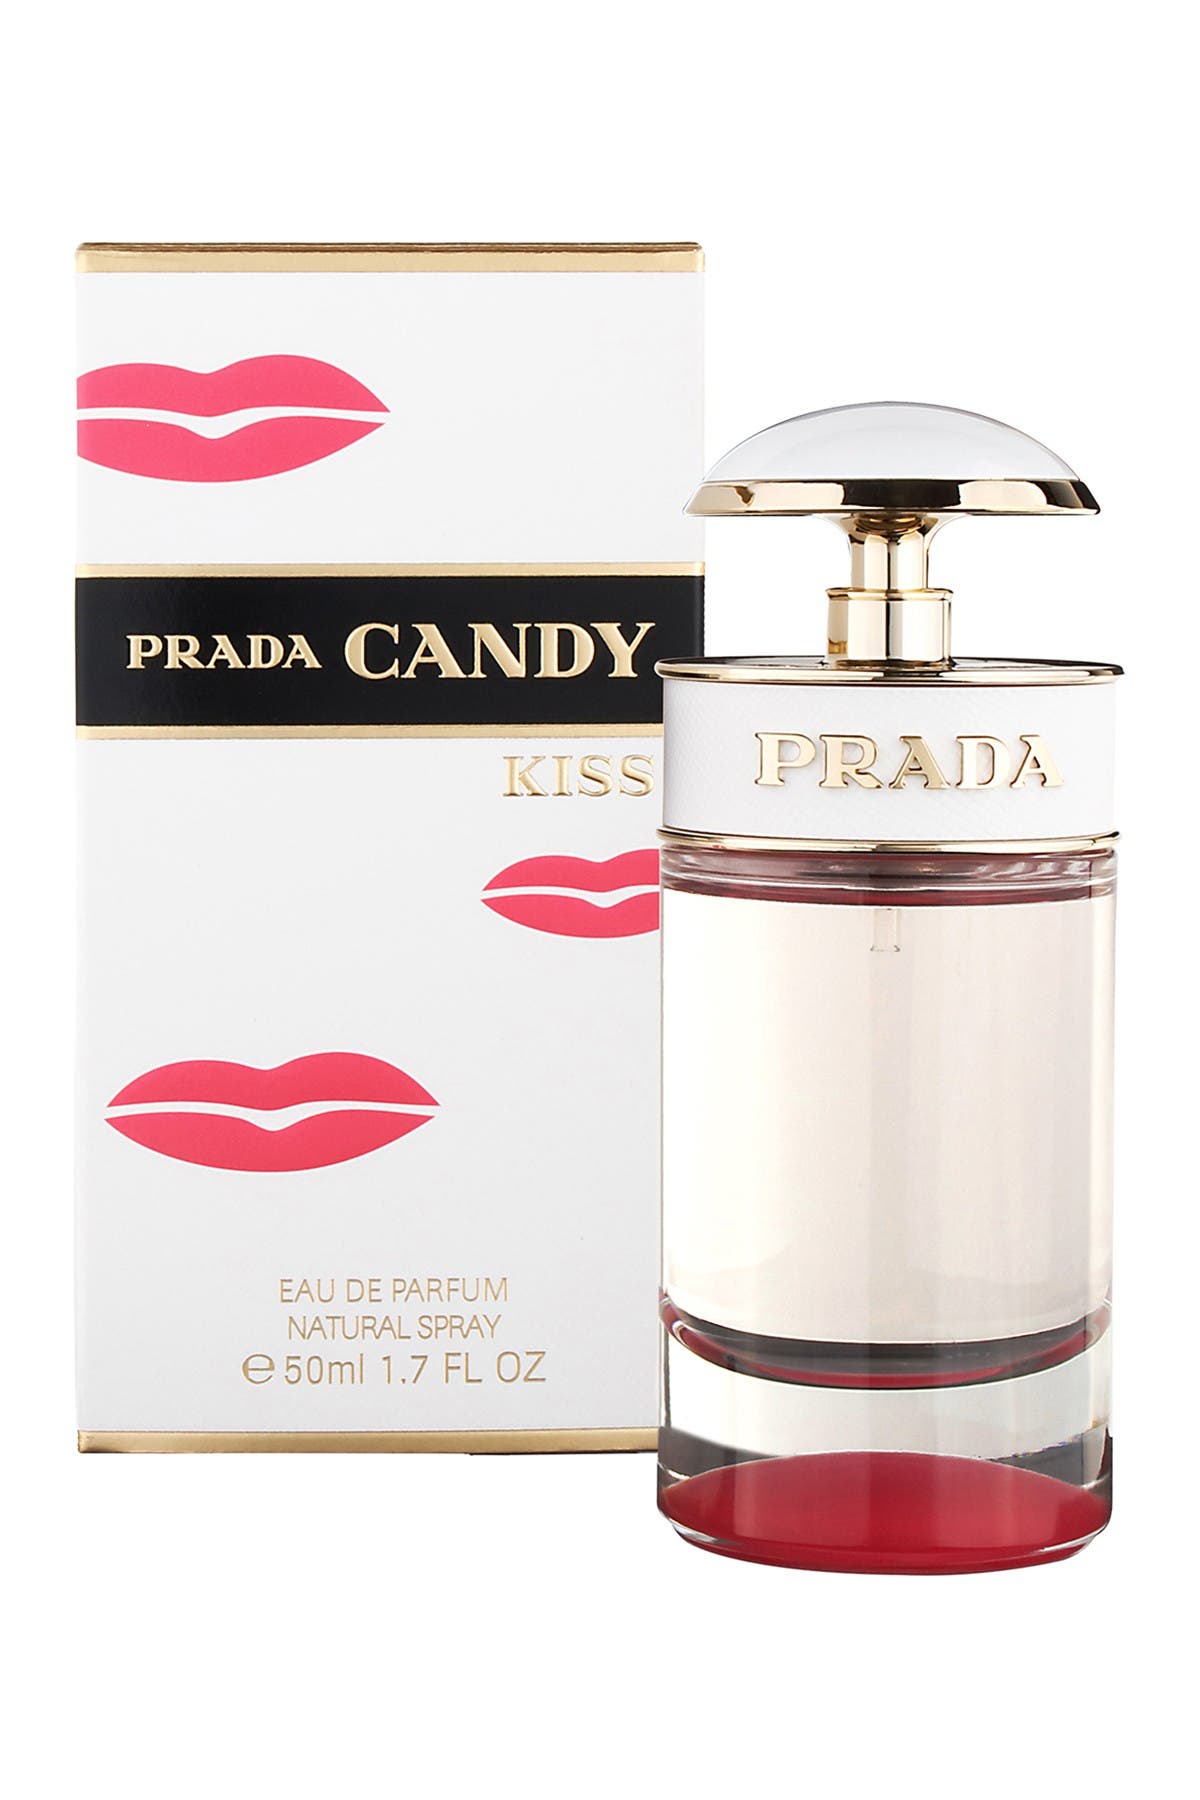 prada candy kiss 1.7 oz